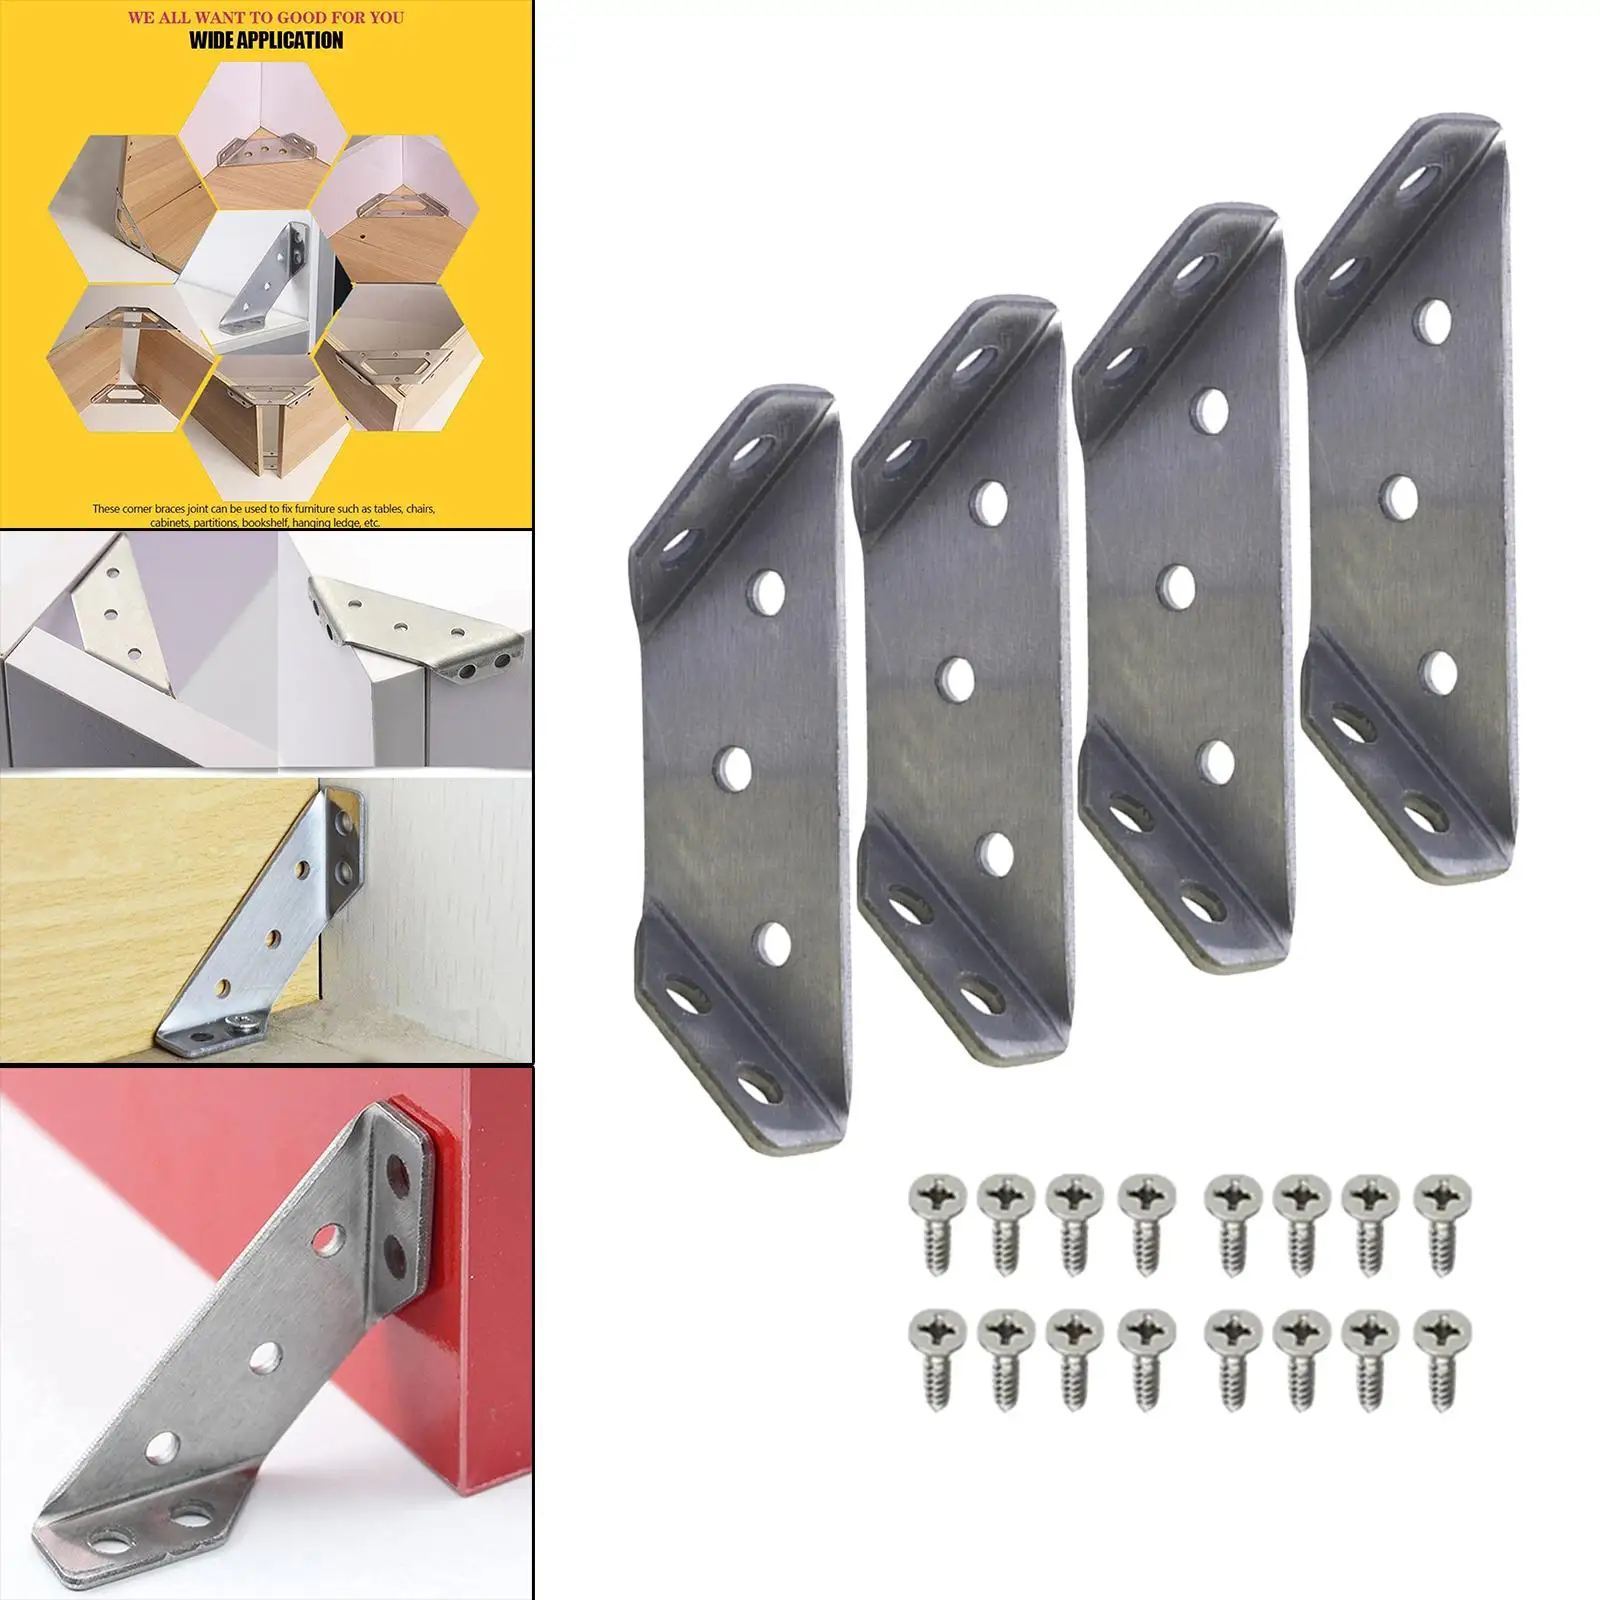 4 Pieces Angle Corner Brackets Triangular Support Furniture Corner Connector Joint Bracket for Shelves Door